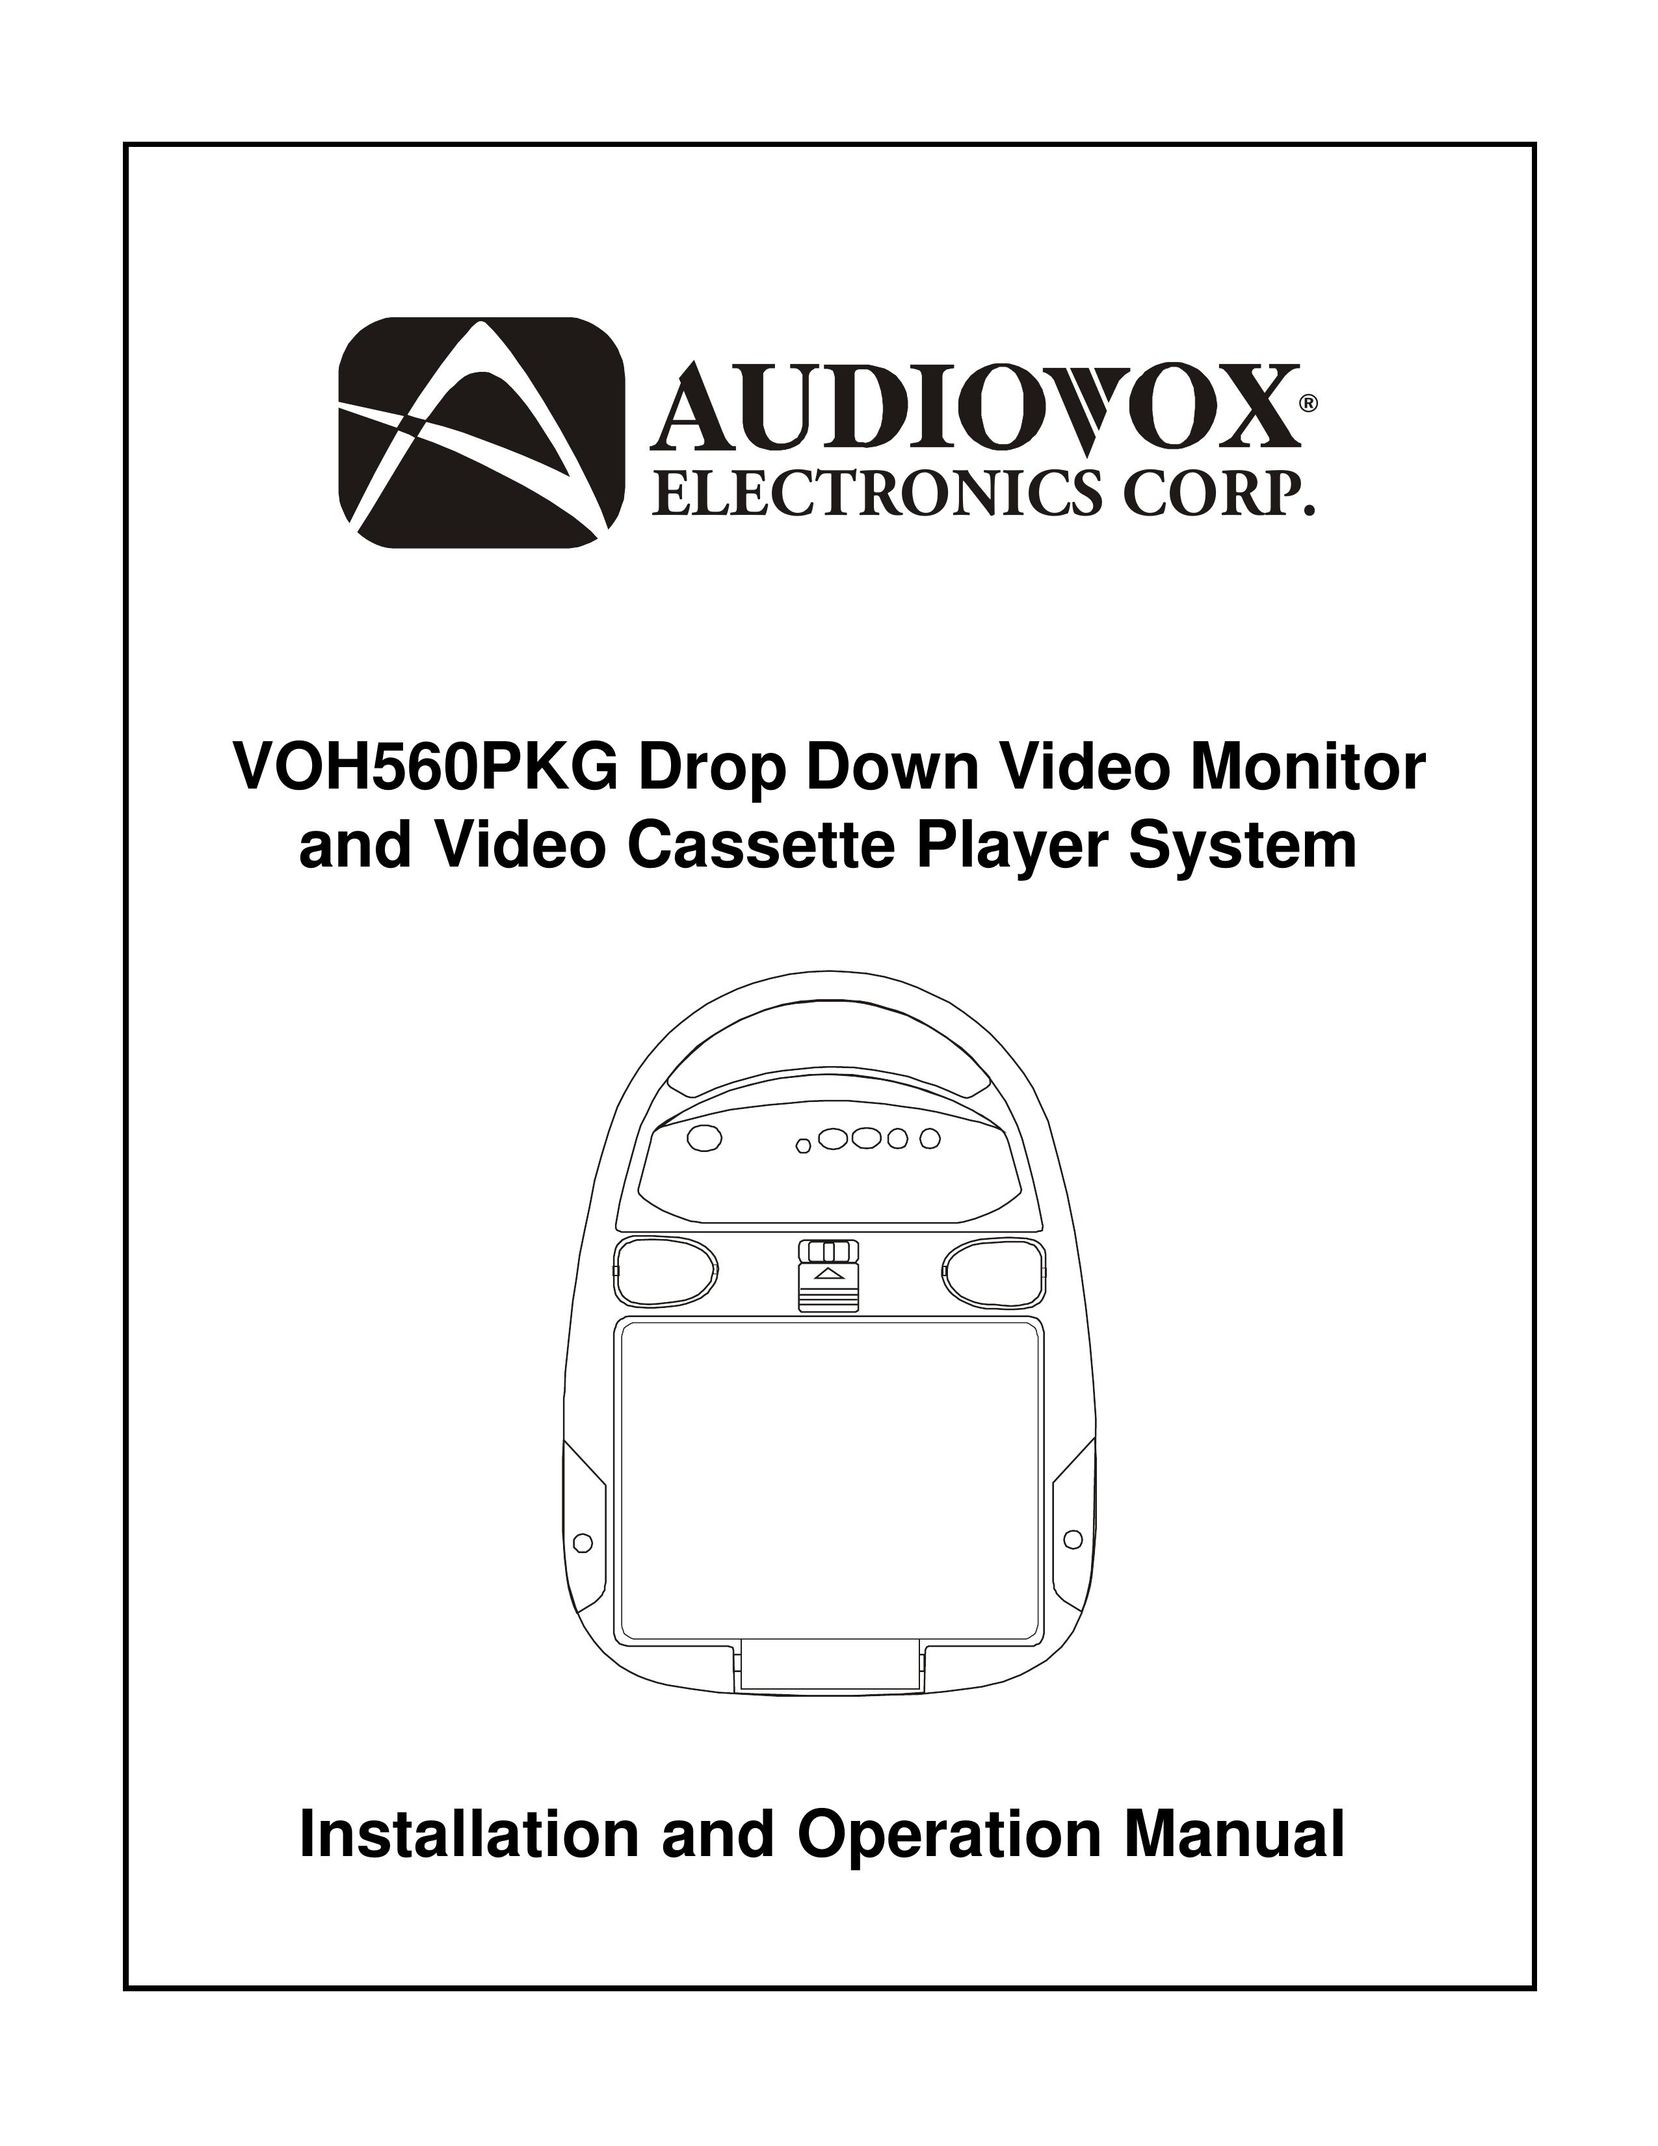 Audiovox VOH560PKG VCR User Manual